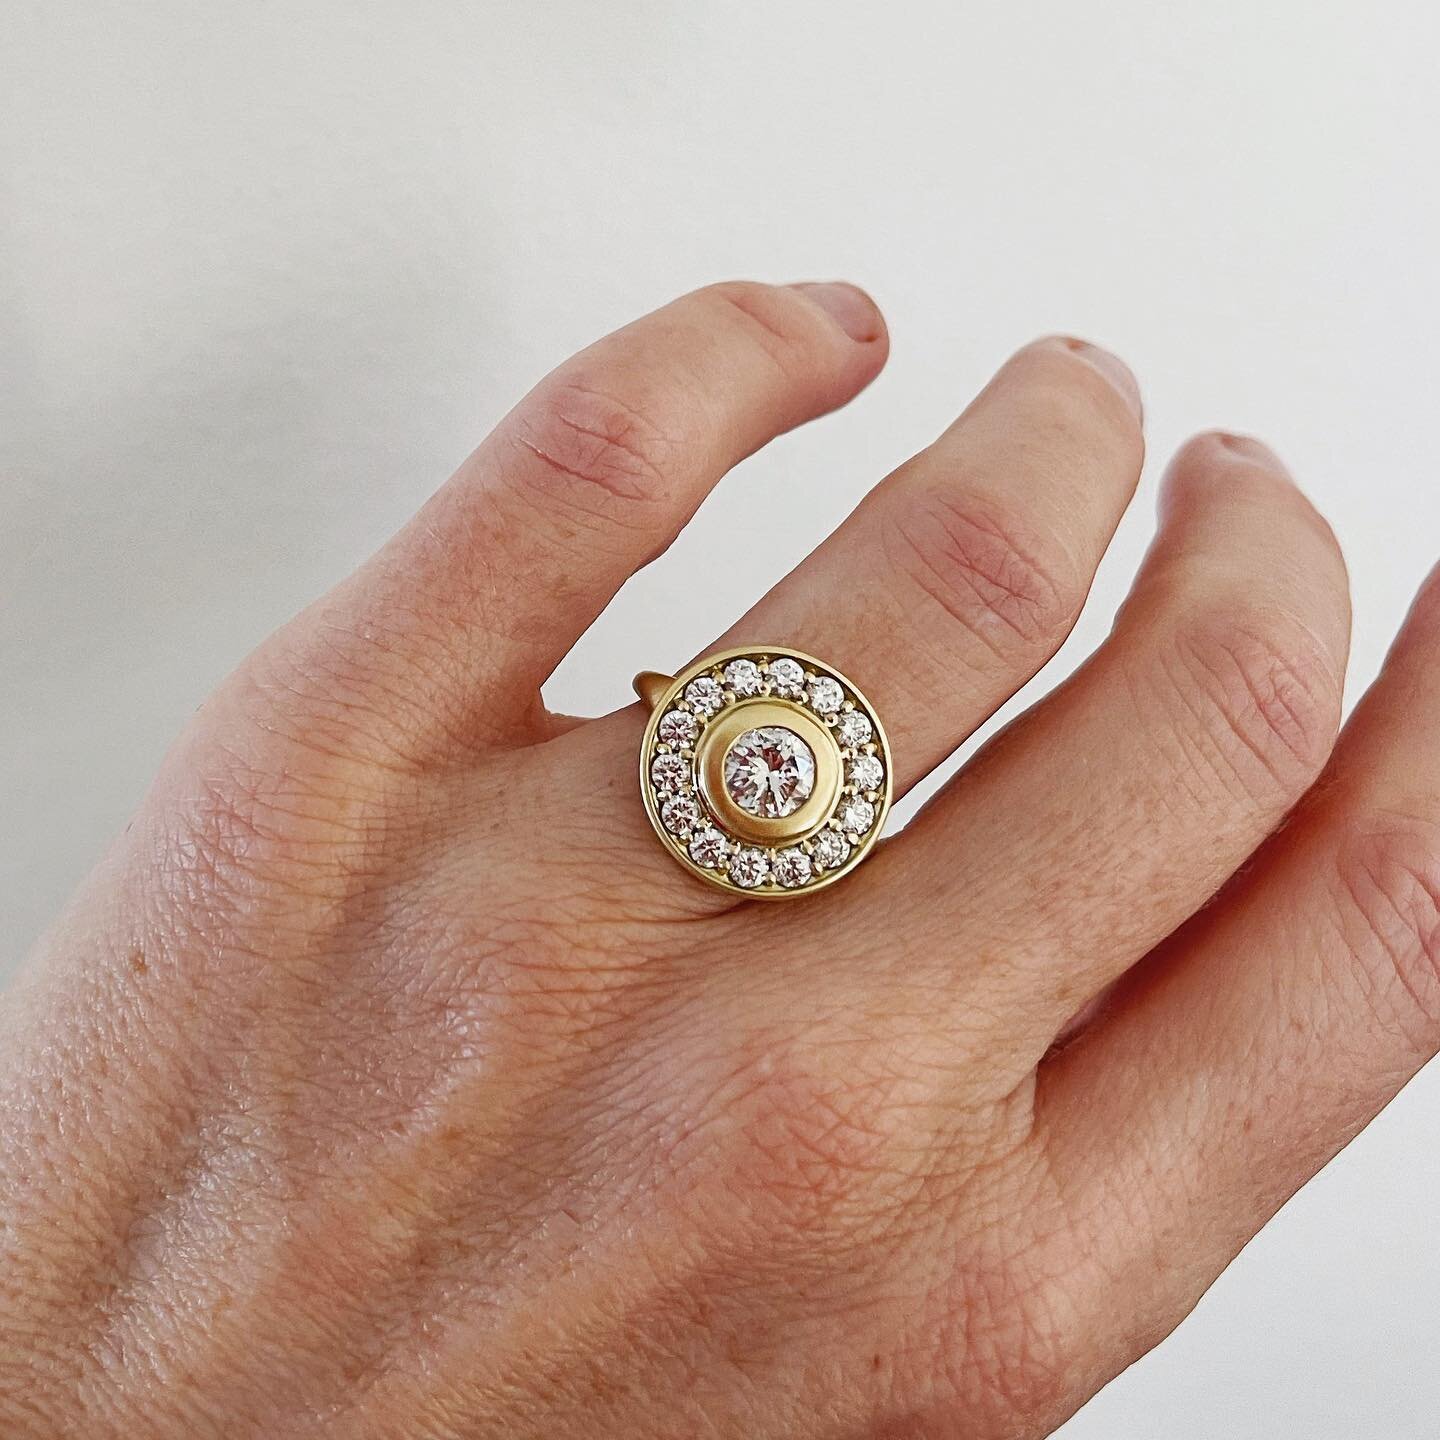 GEORGIA RING: STELLAR VERSION ✨  #kimcaron #kimcaronjewelry #heirloomqualityjewelry #vintagestylejewelry #engagementring #diamondring #ethicallysourceddiamonds